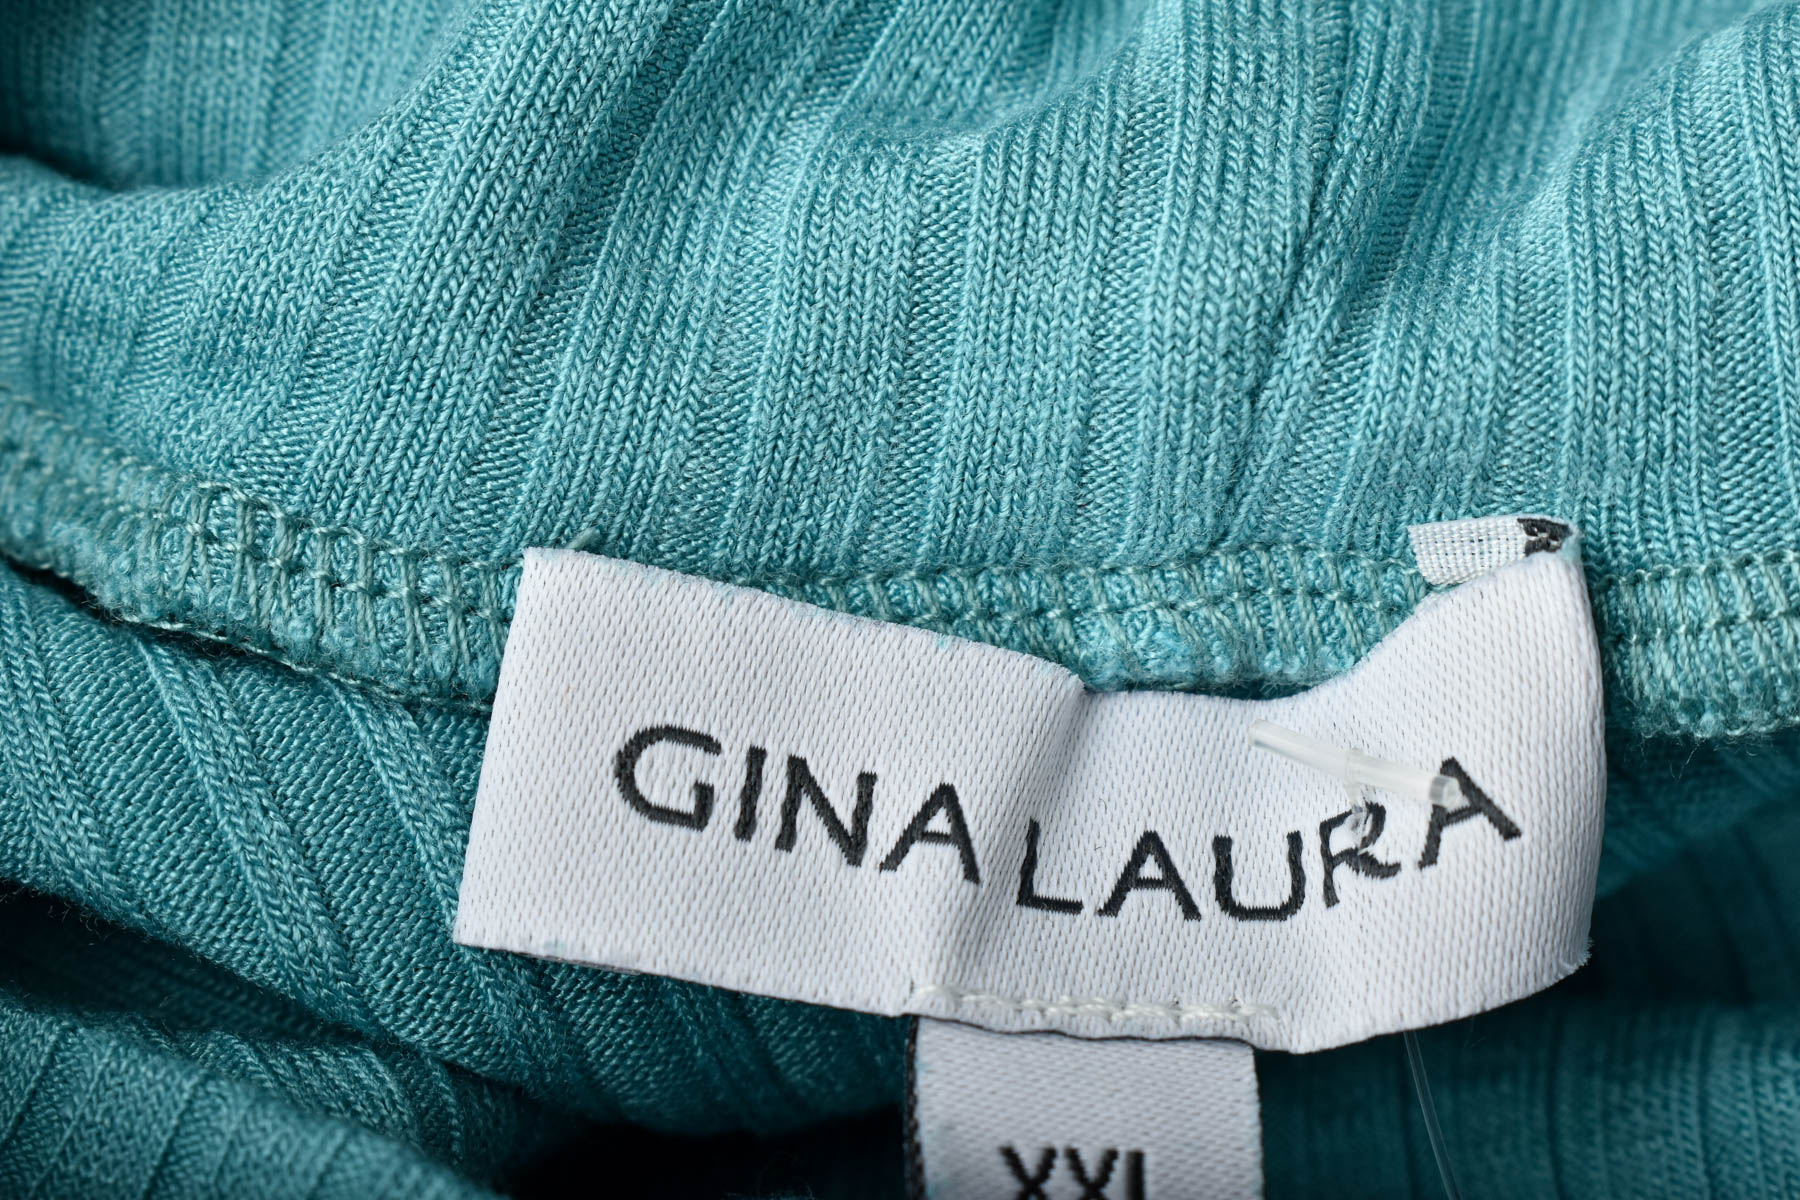 Women's blouse - Gina Laura - 2